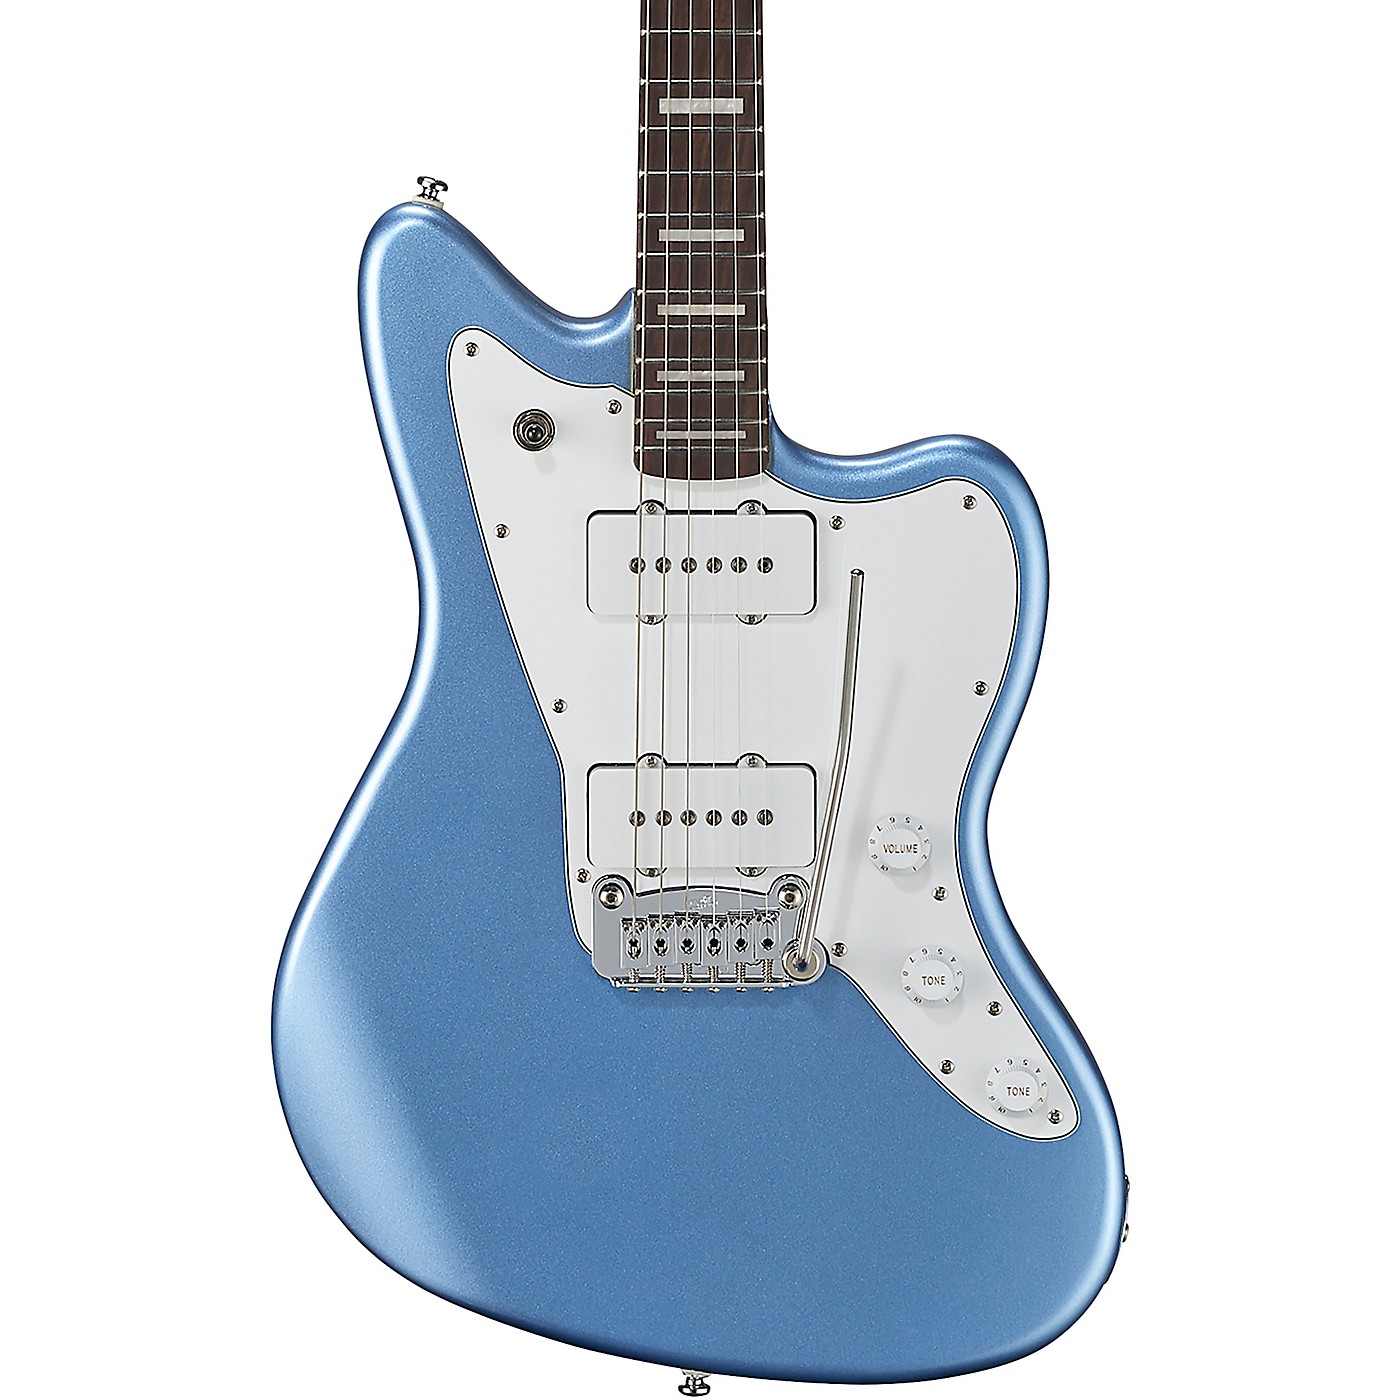 Электрогитара homage. Fender Redondo голубая. Homage электрогитара синяя. Бирюзовая электрогитара g&l. Электрогитара g